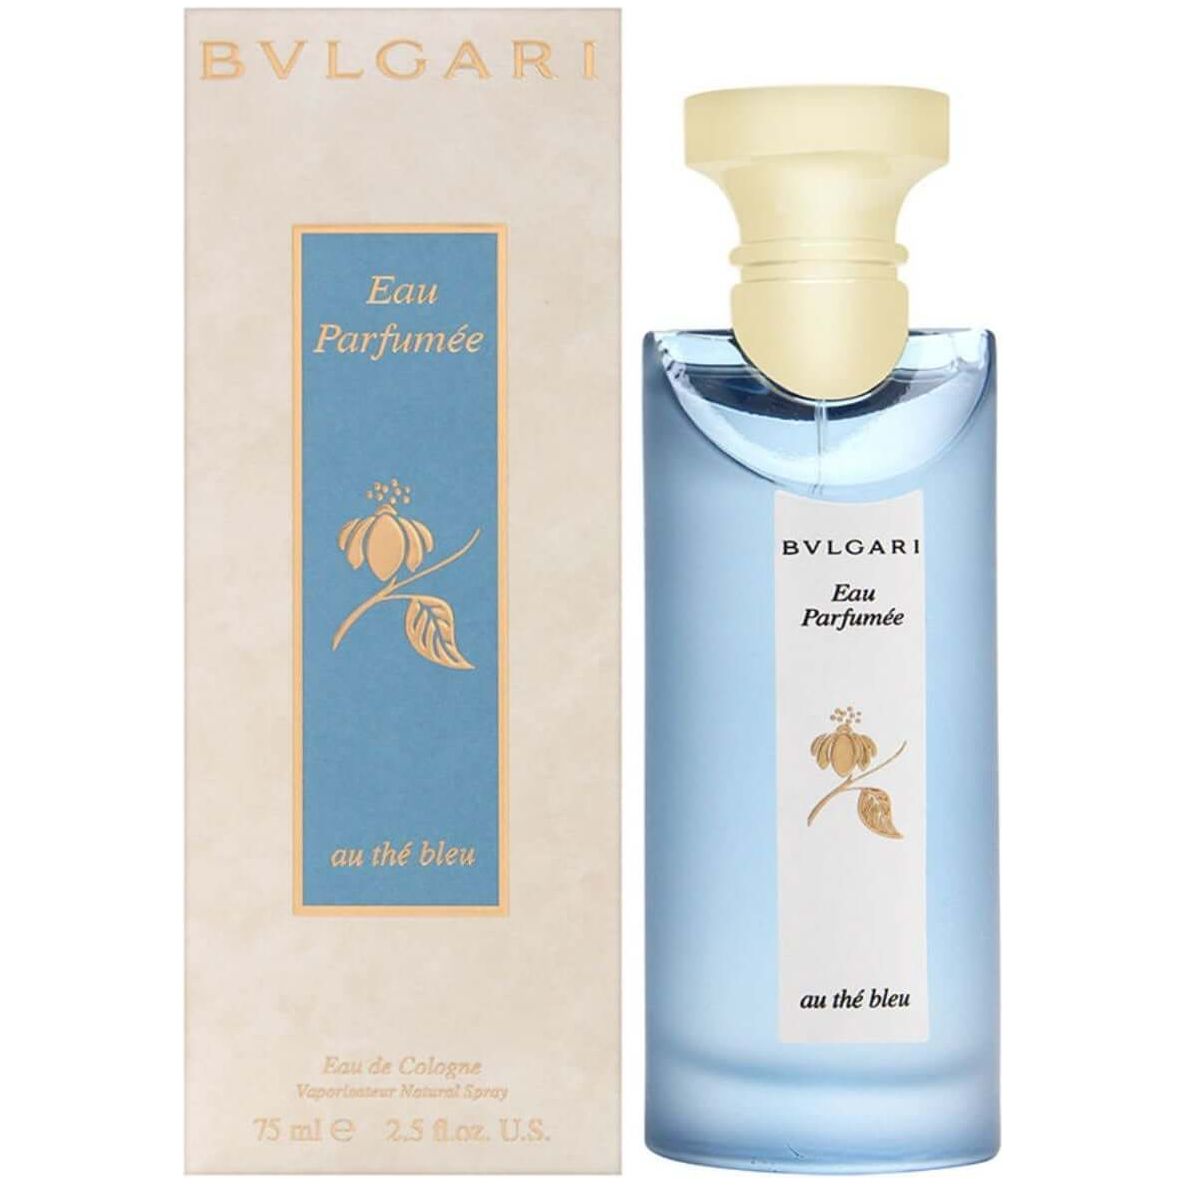 Bvlgari Eau Parfumee Au The Bleu by Bvlgari cologne for unisex EDC 2.5